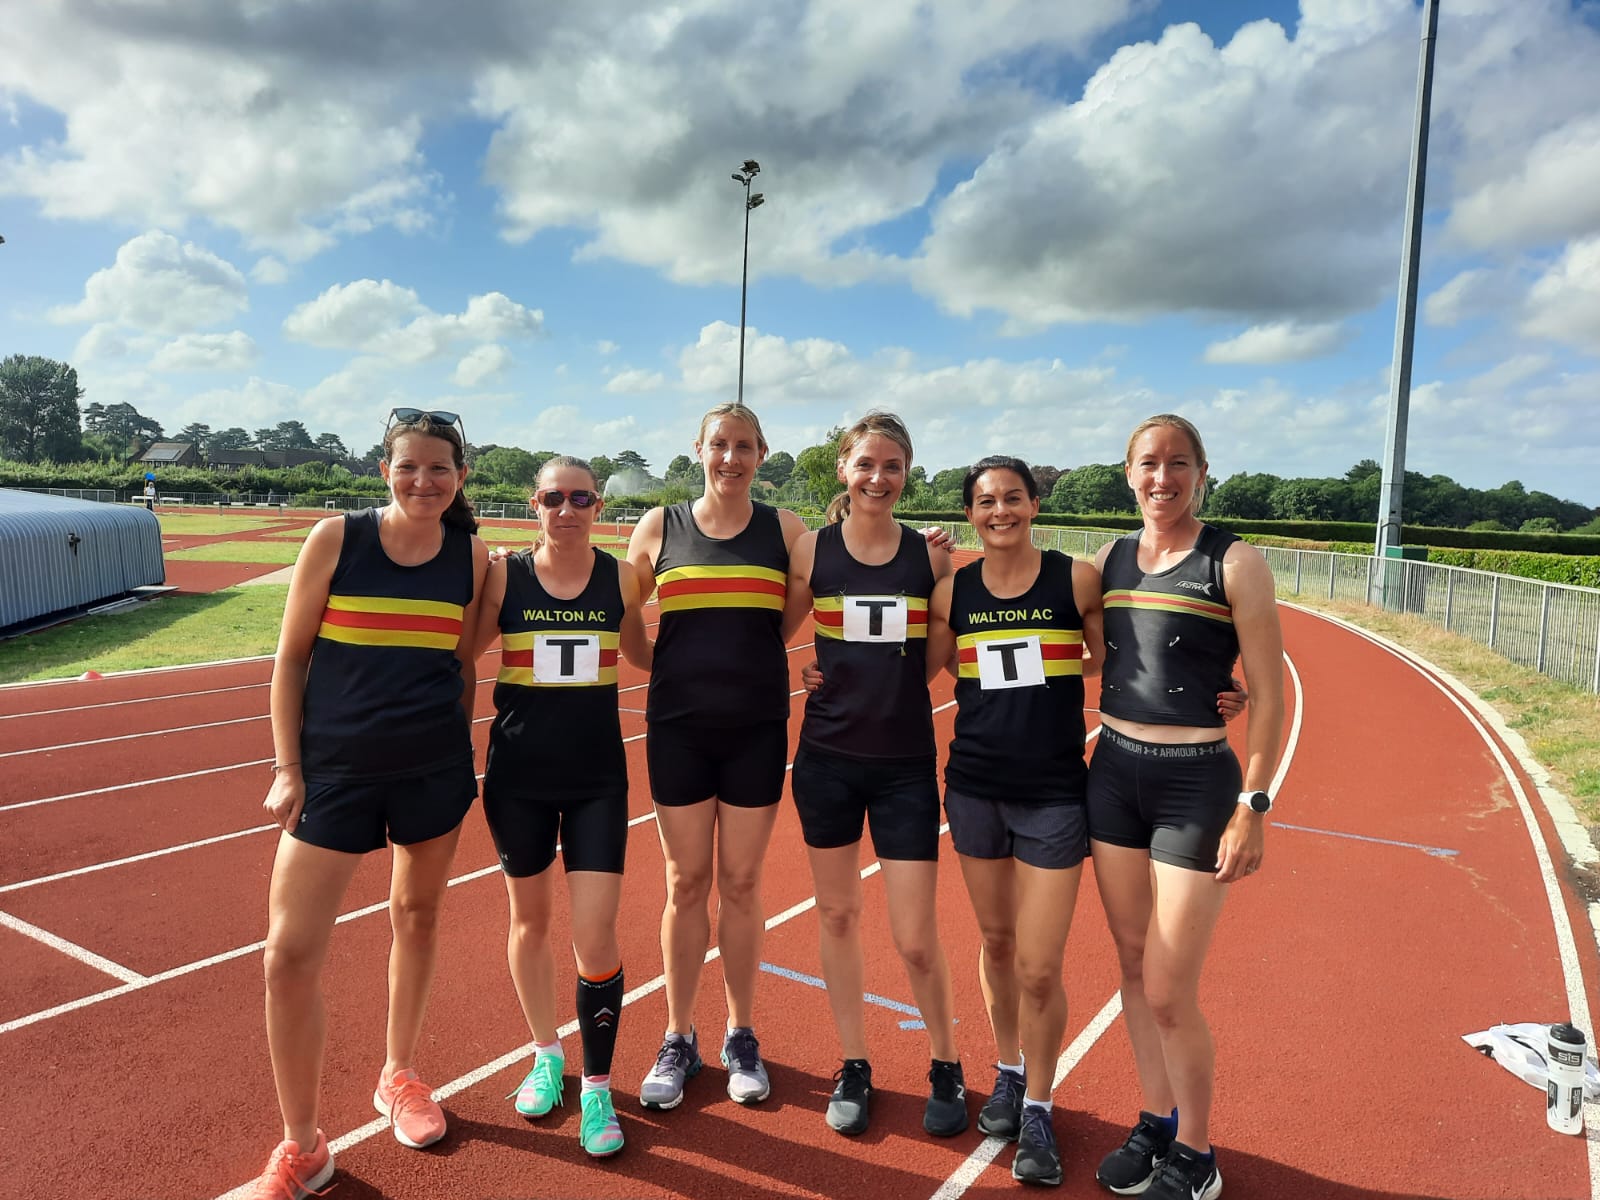 Five ladies on an athletics track